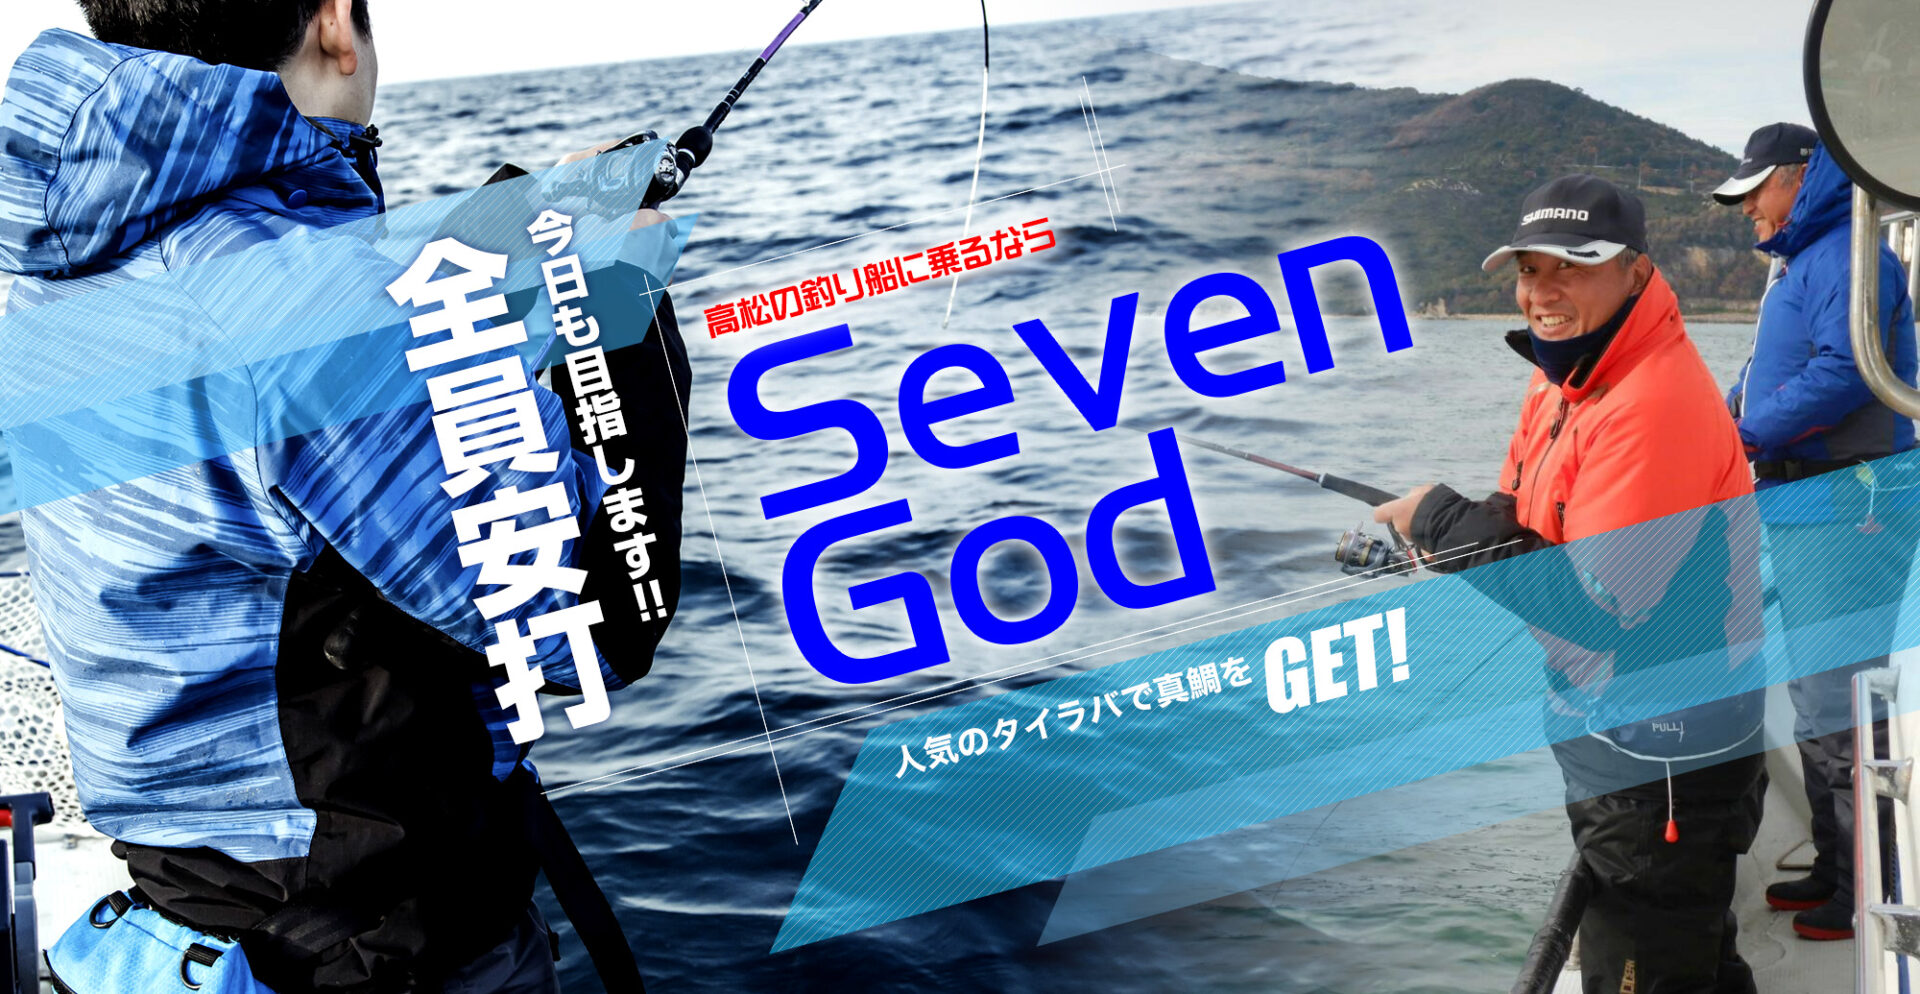 Seven God